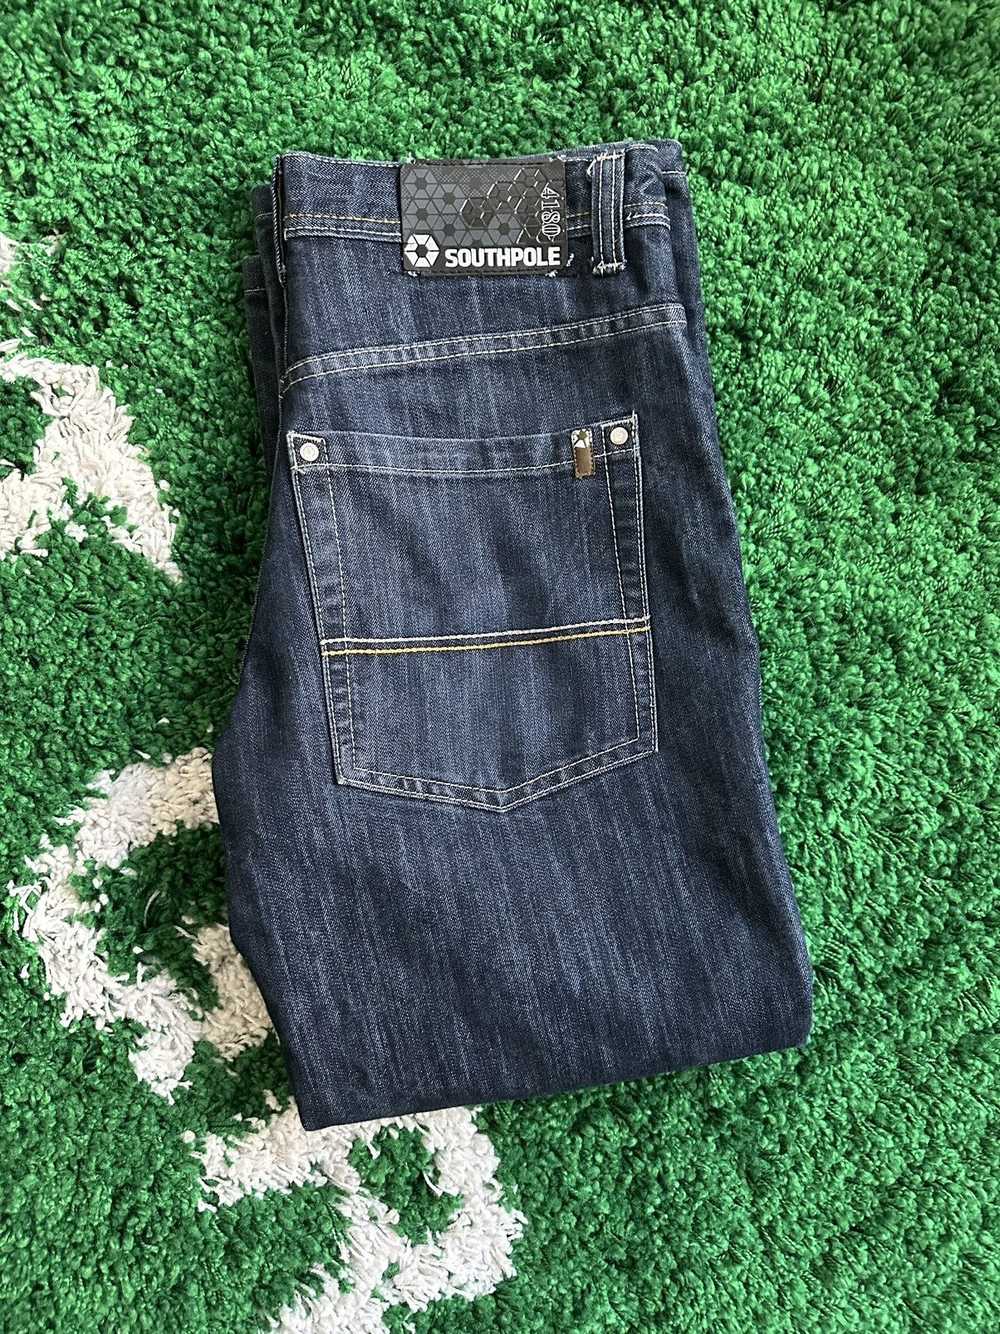 Southpole × Vintage Southpole wide leg jeans - image 1